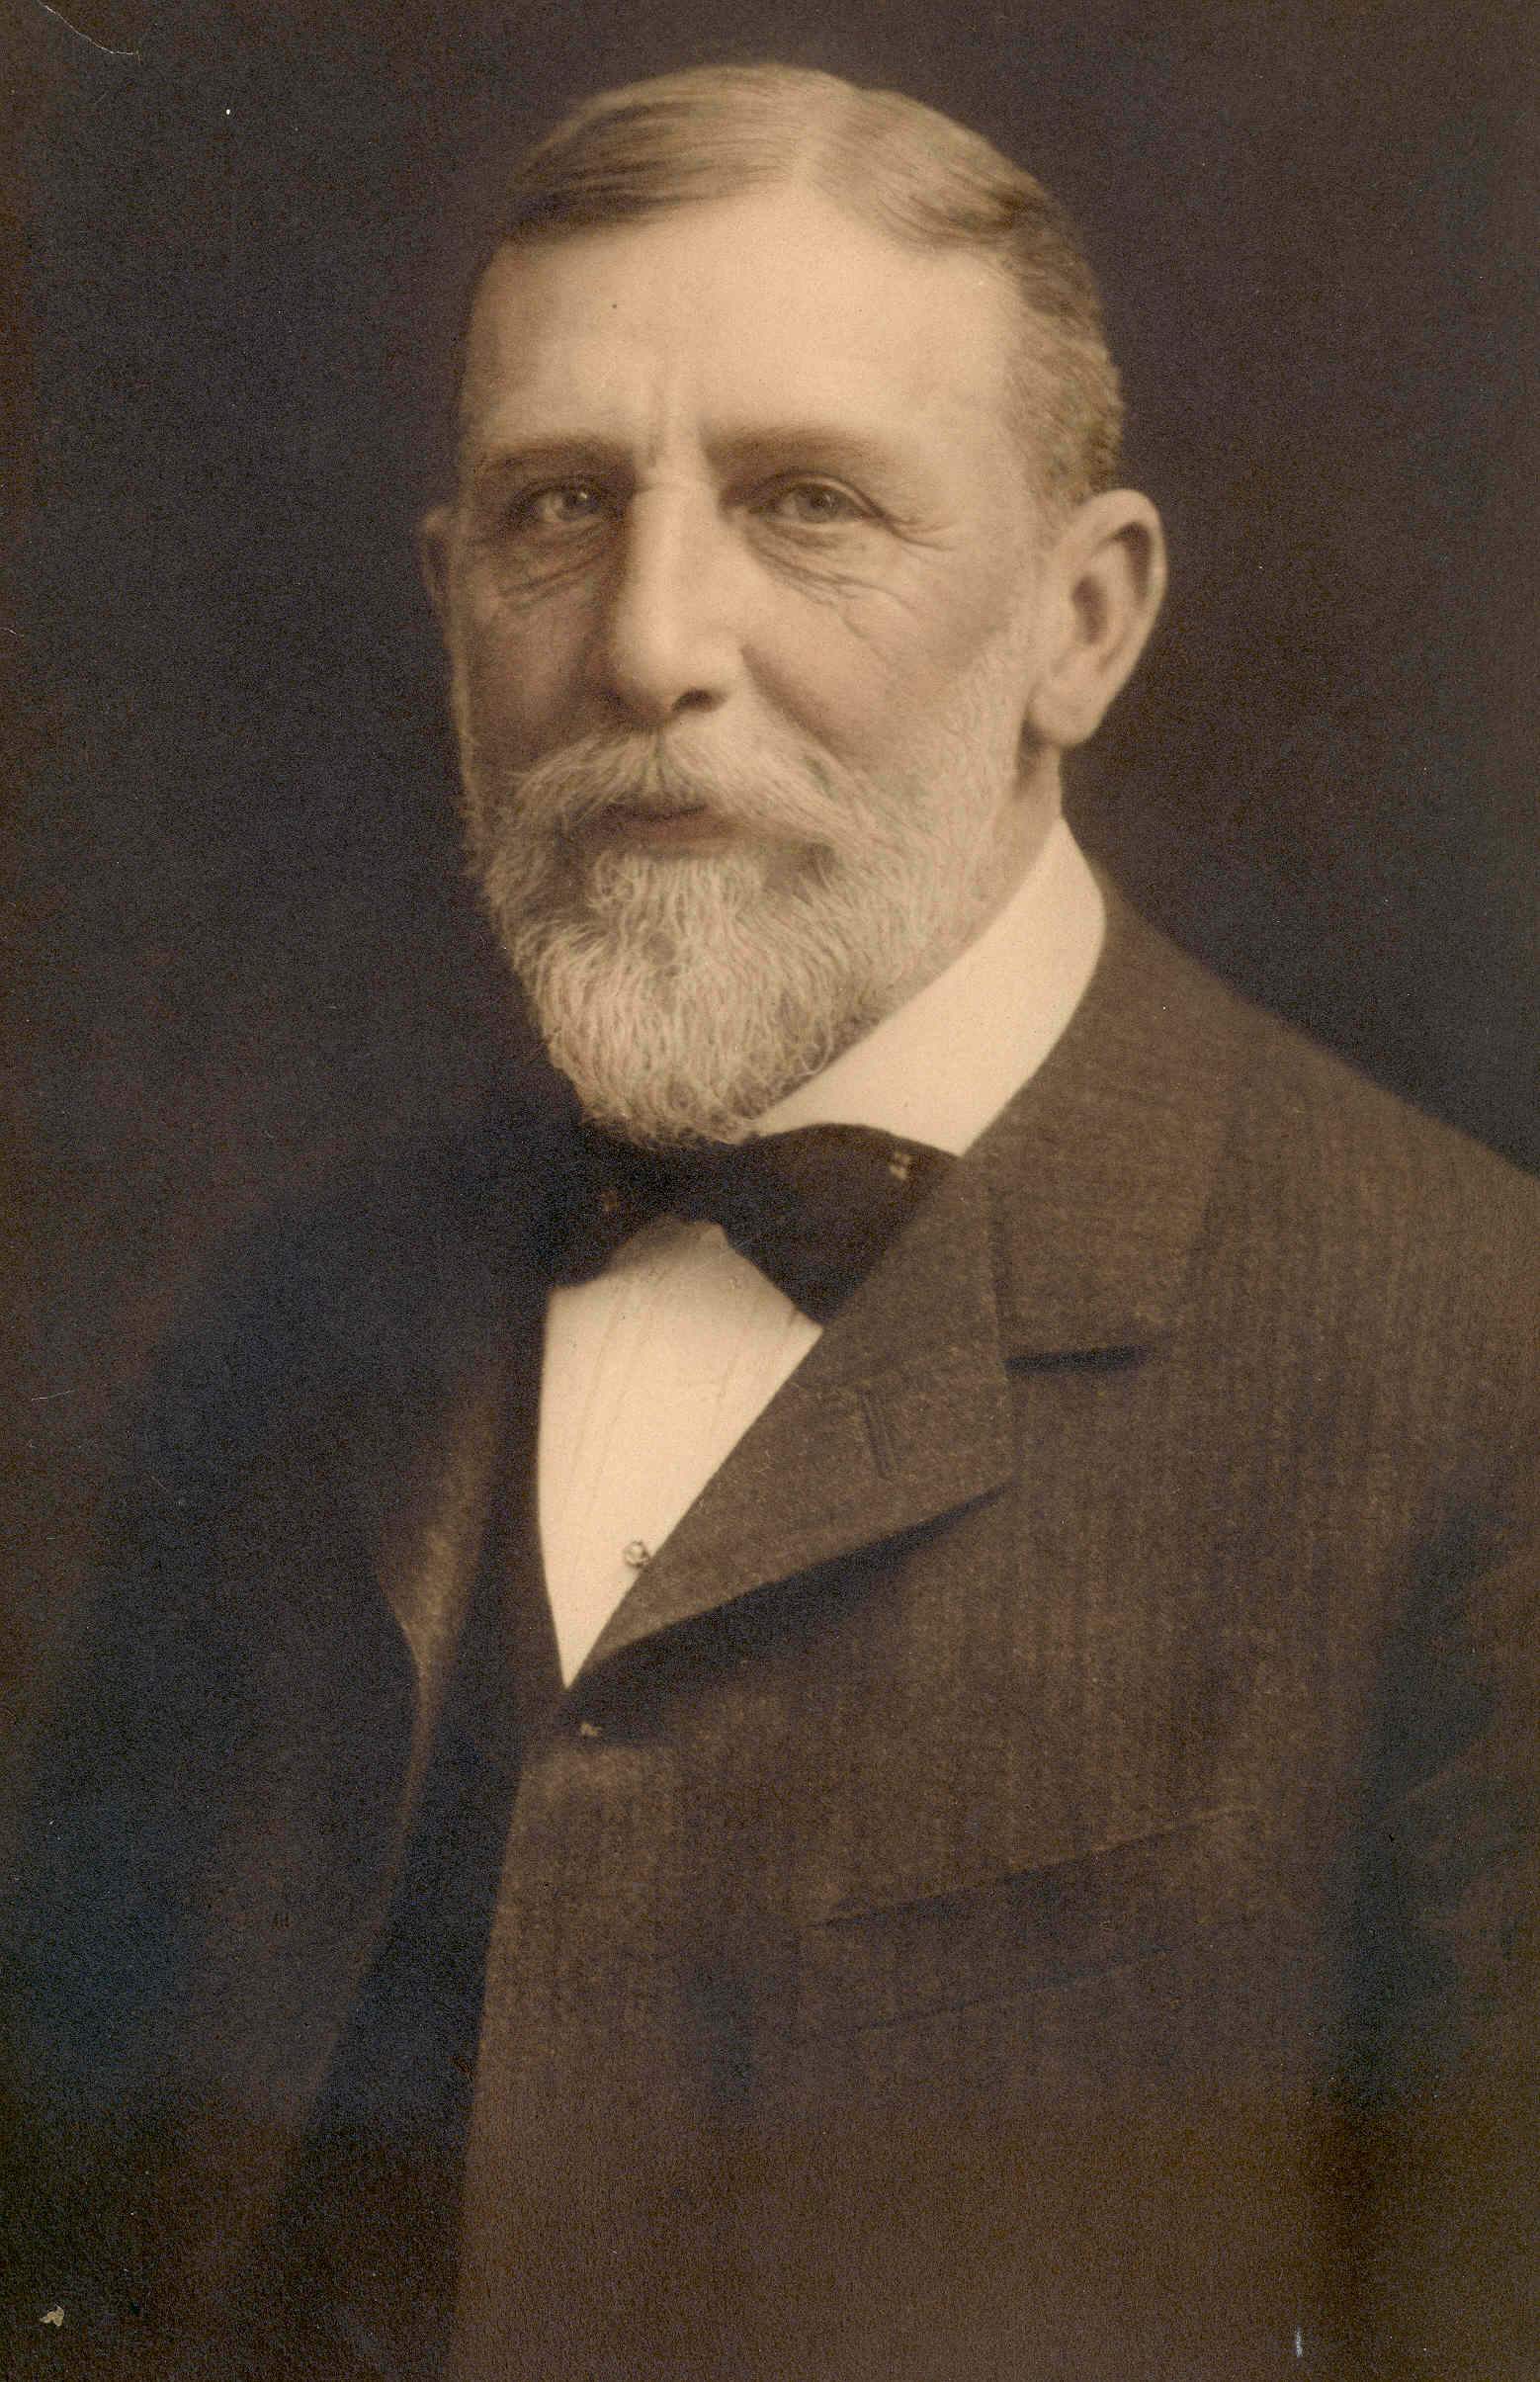 William Eliot Smith, founder of the Illinois Glass Company